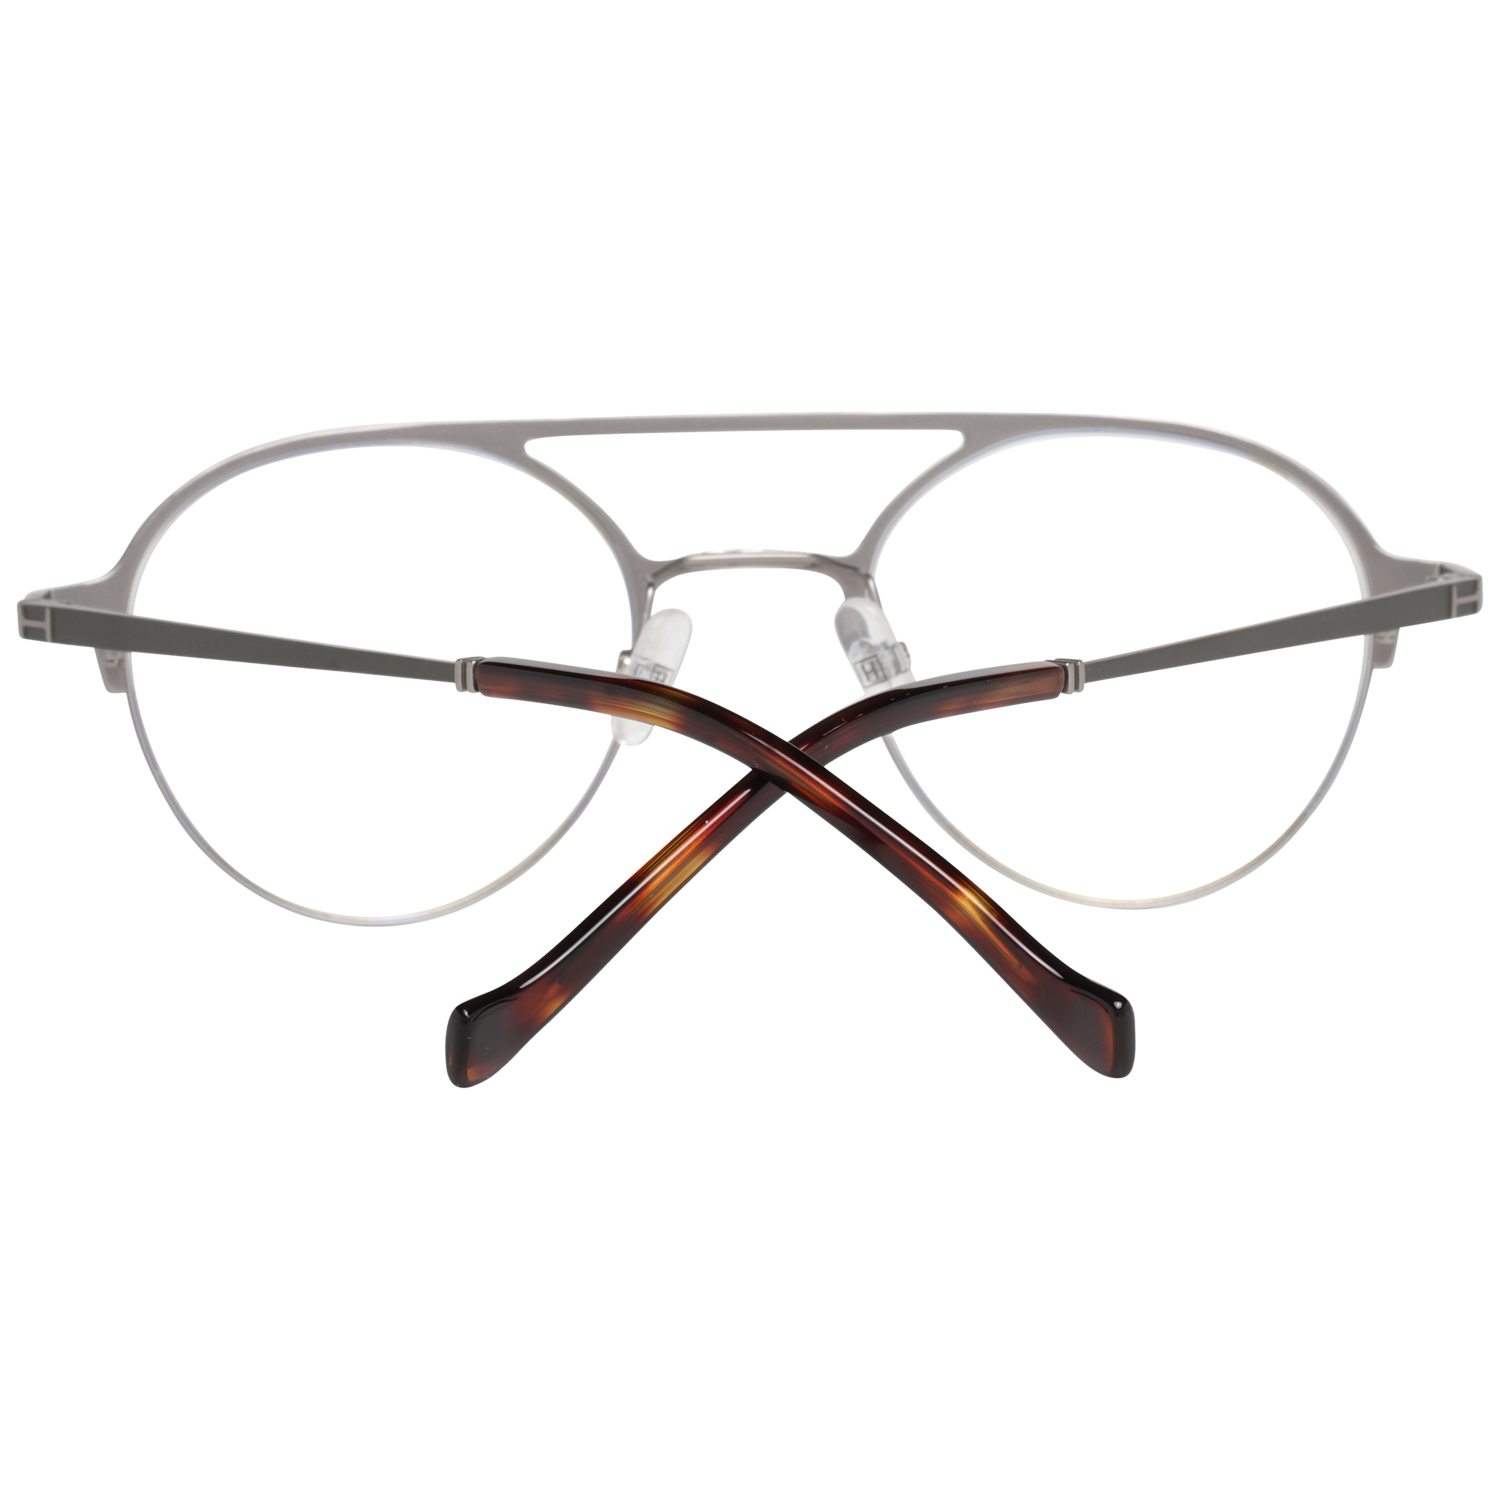 Hackett Frames Hackett Bespoke Glasses Optical Frame  HEB249 548 49 Eyeglasses Eyewear UK USA Australia 